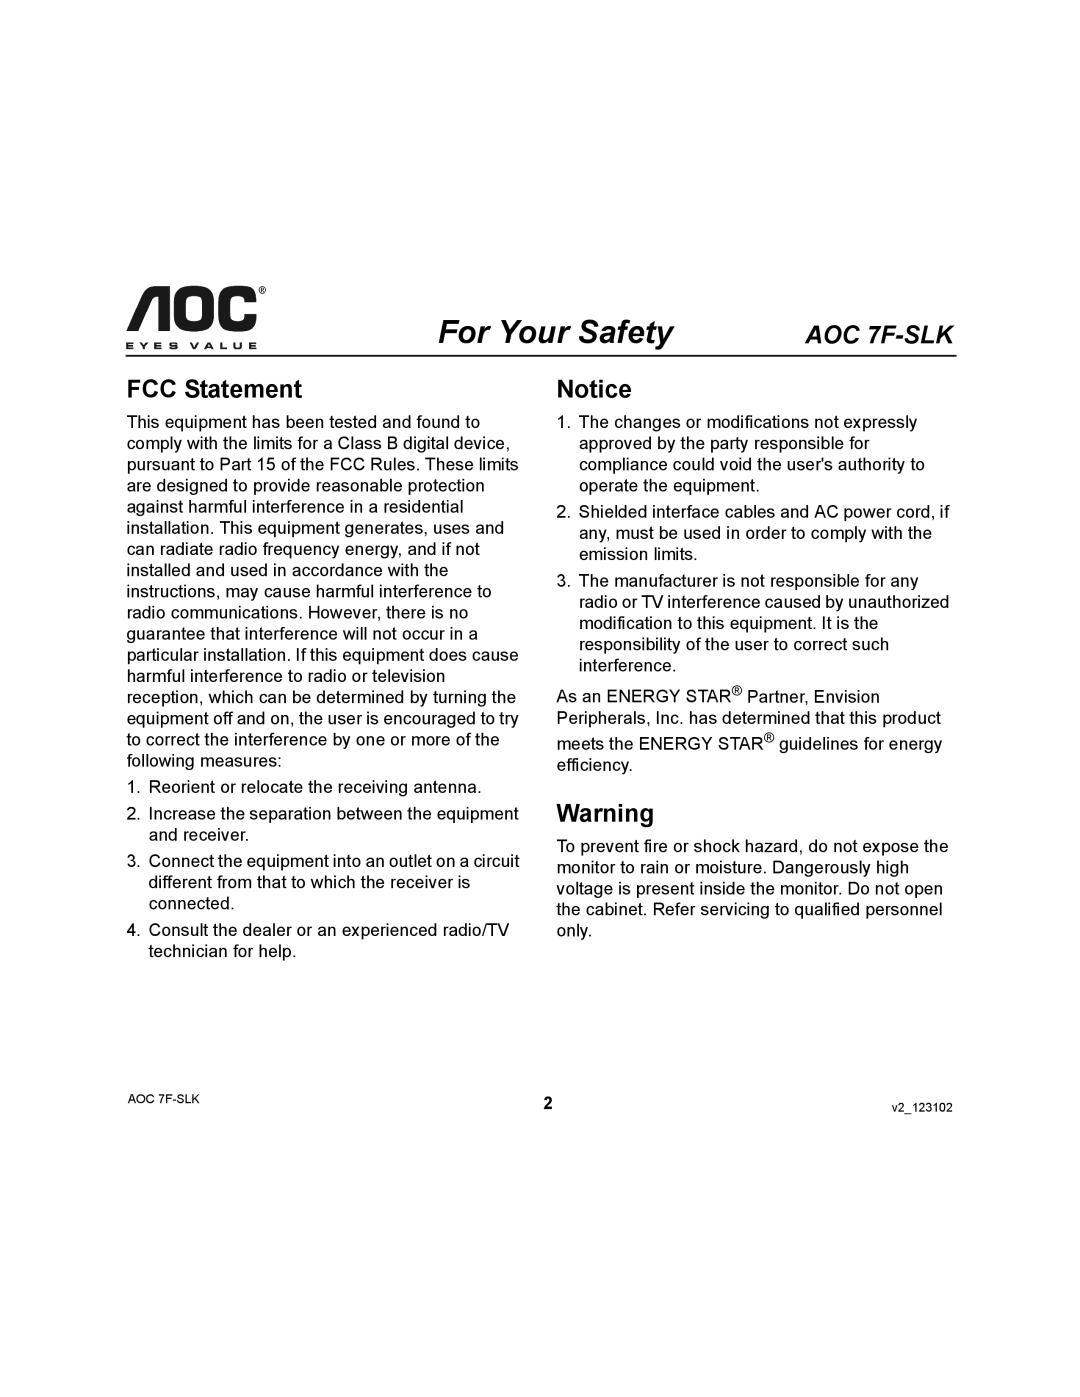 AOC 7F-SLK user manual For Your Safety, FCC Statement 